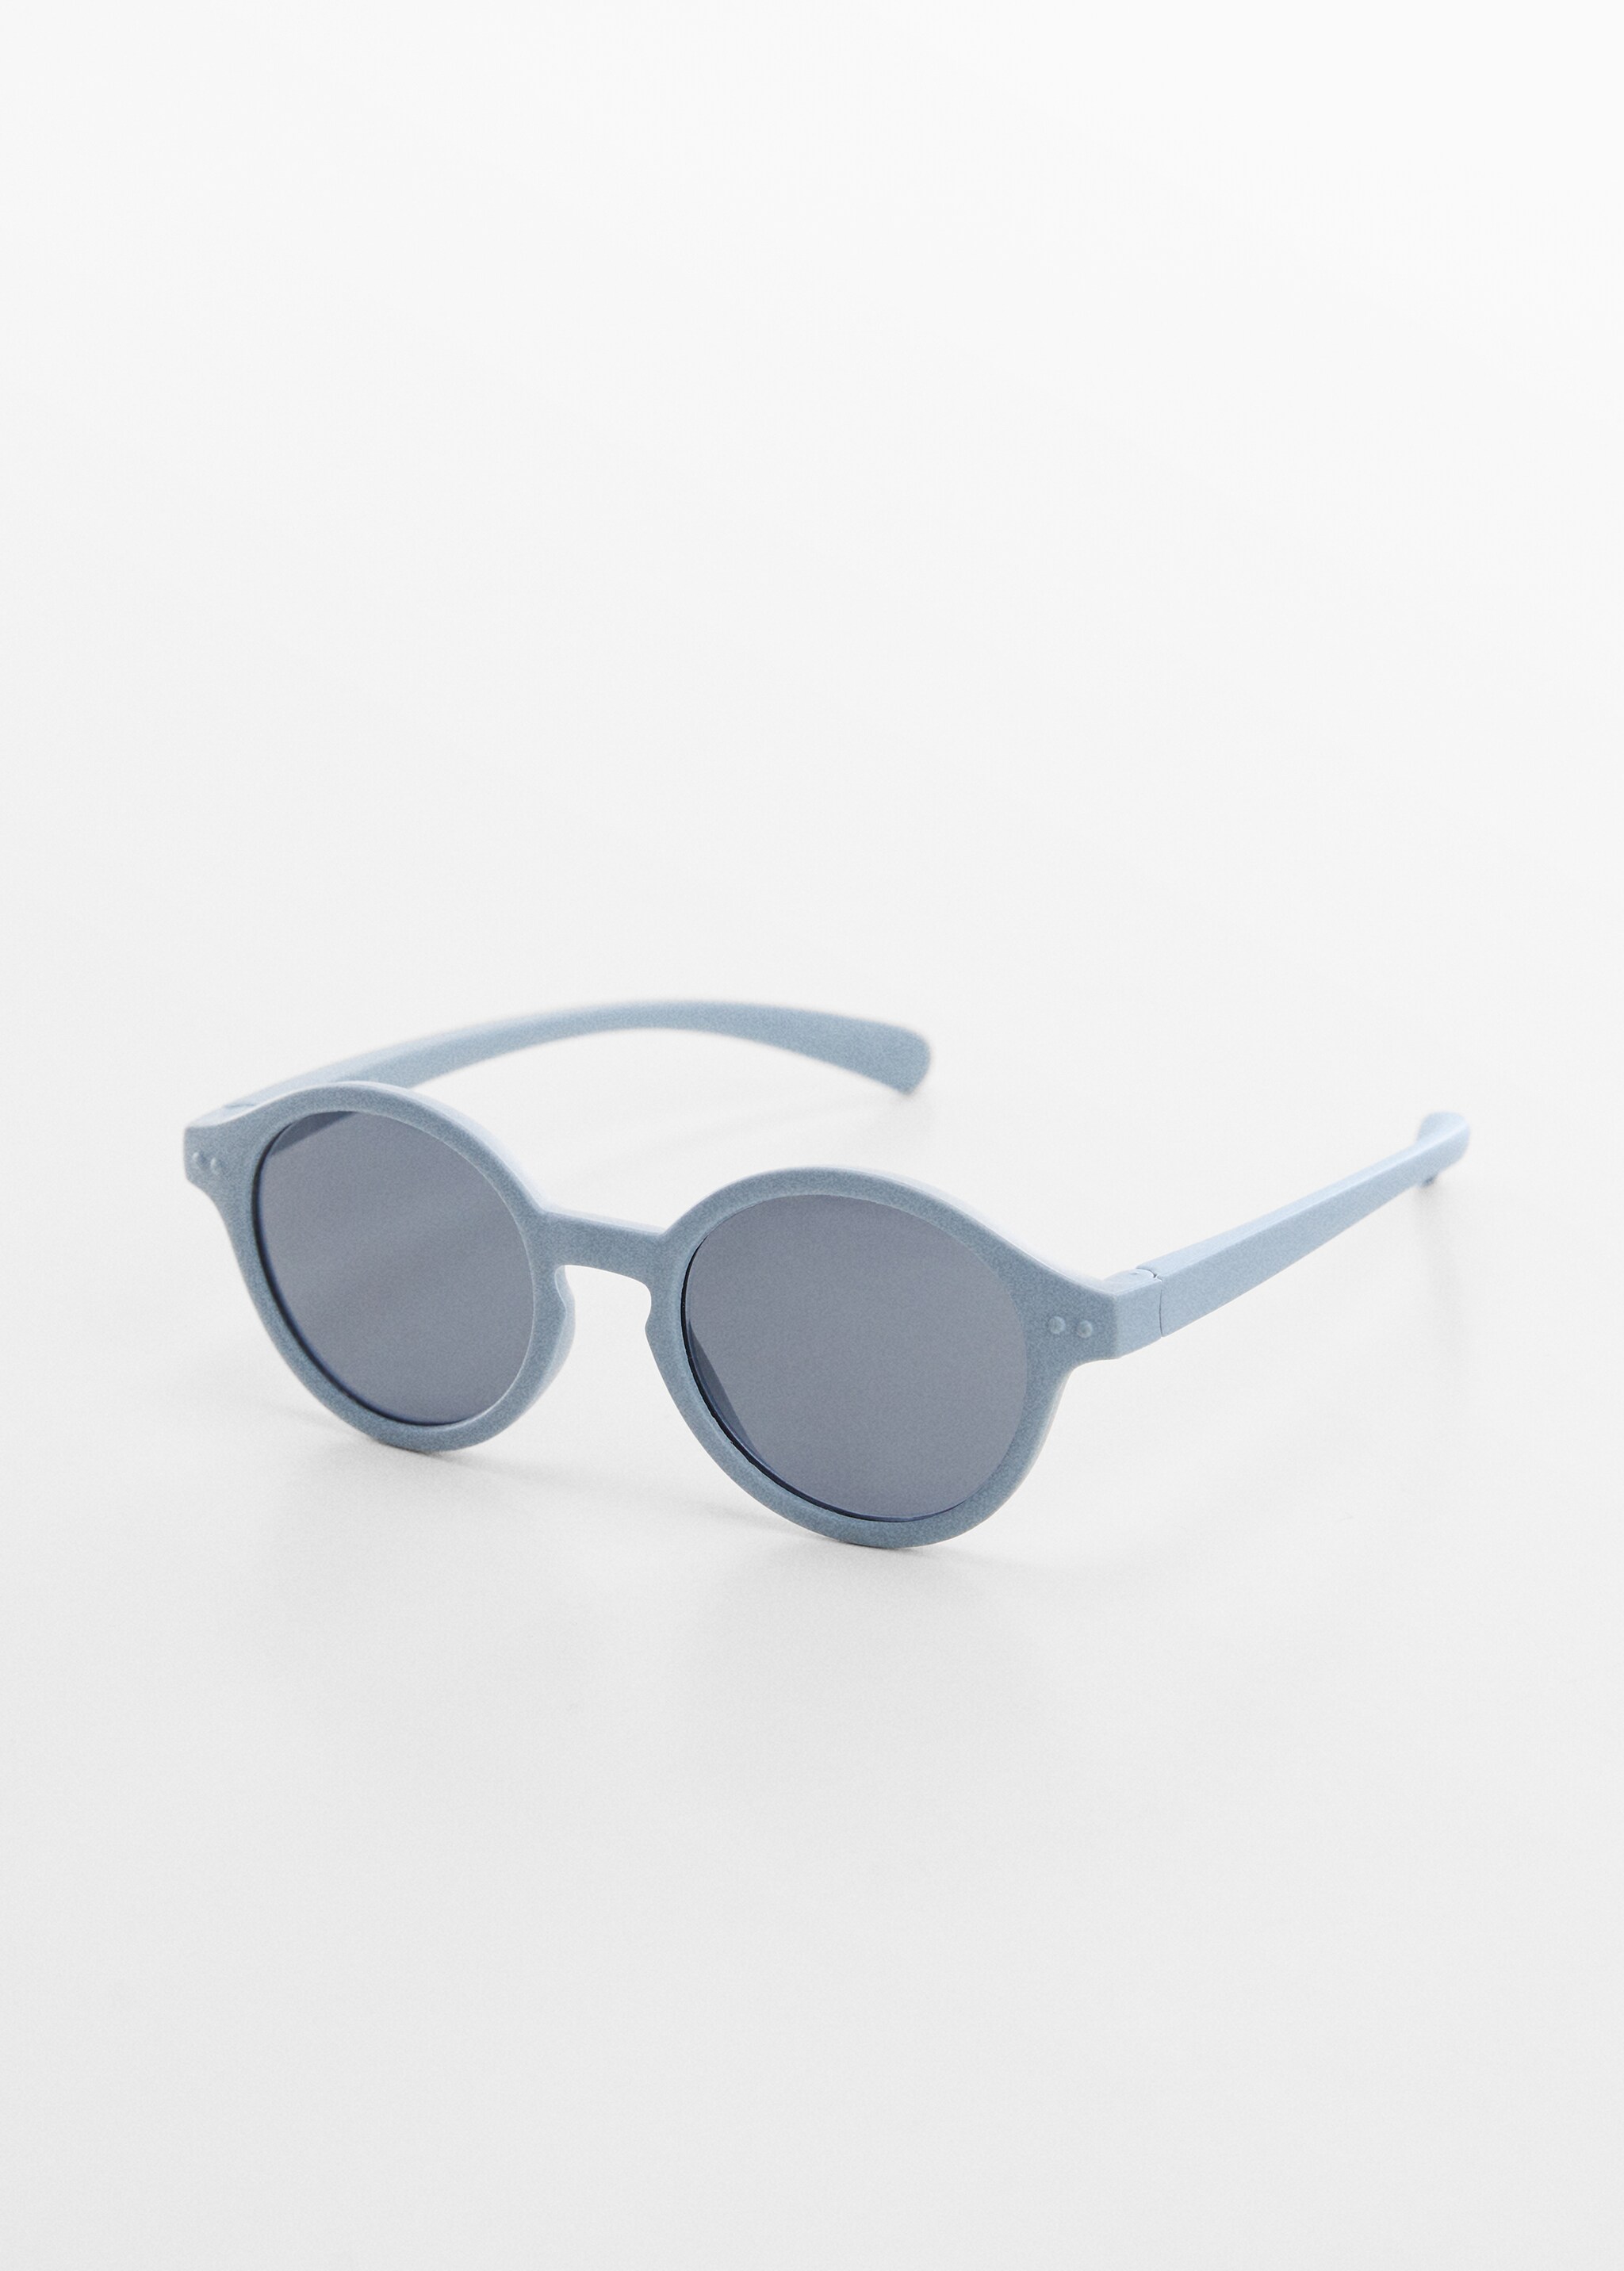 Rounded sunglasses - Medium plane